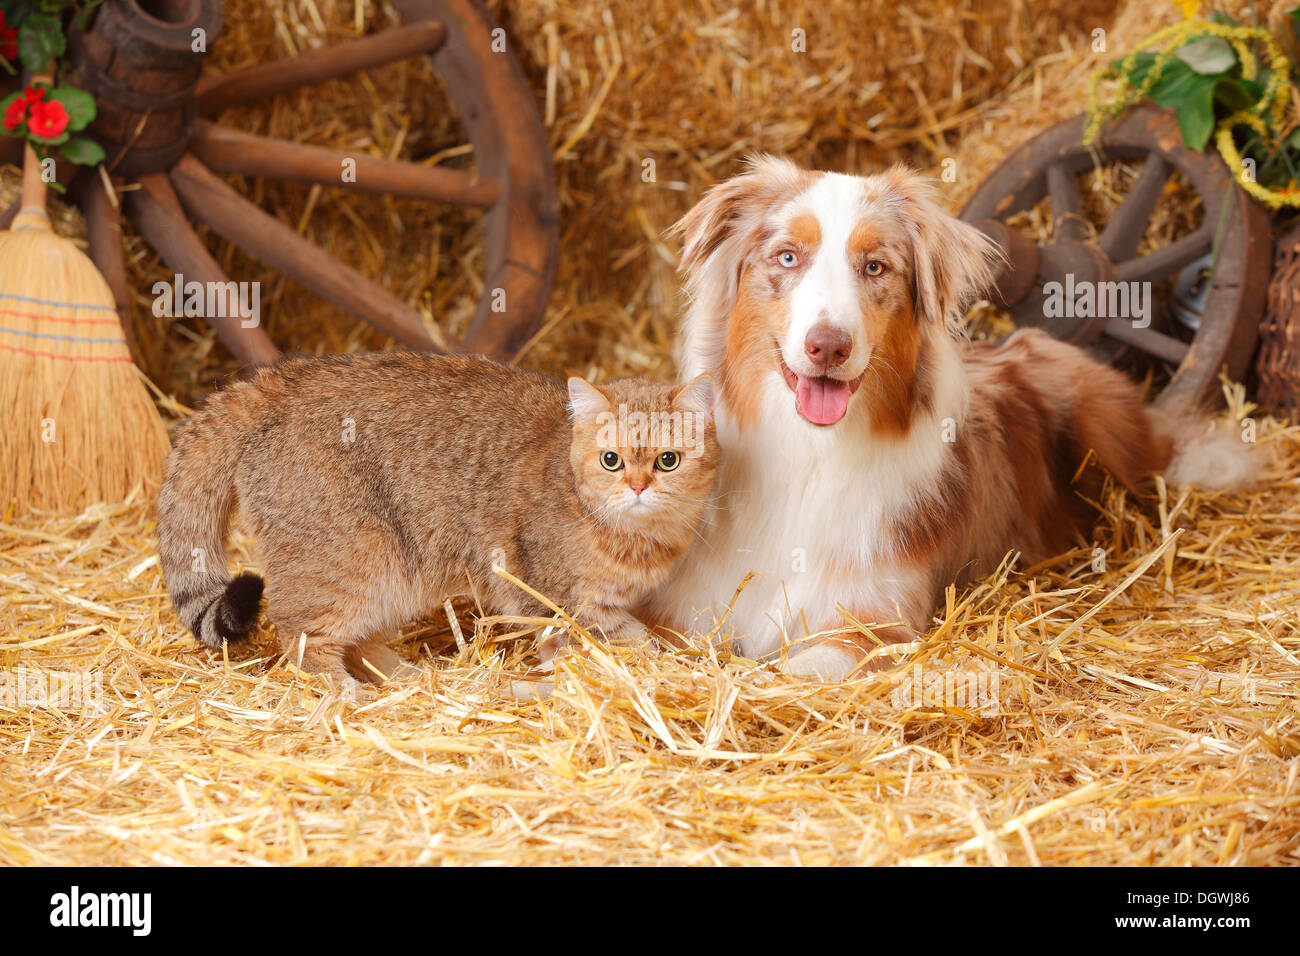 australian shepherd get along with cats